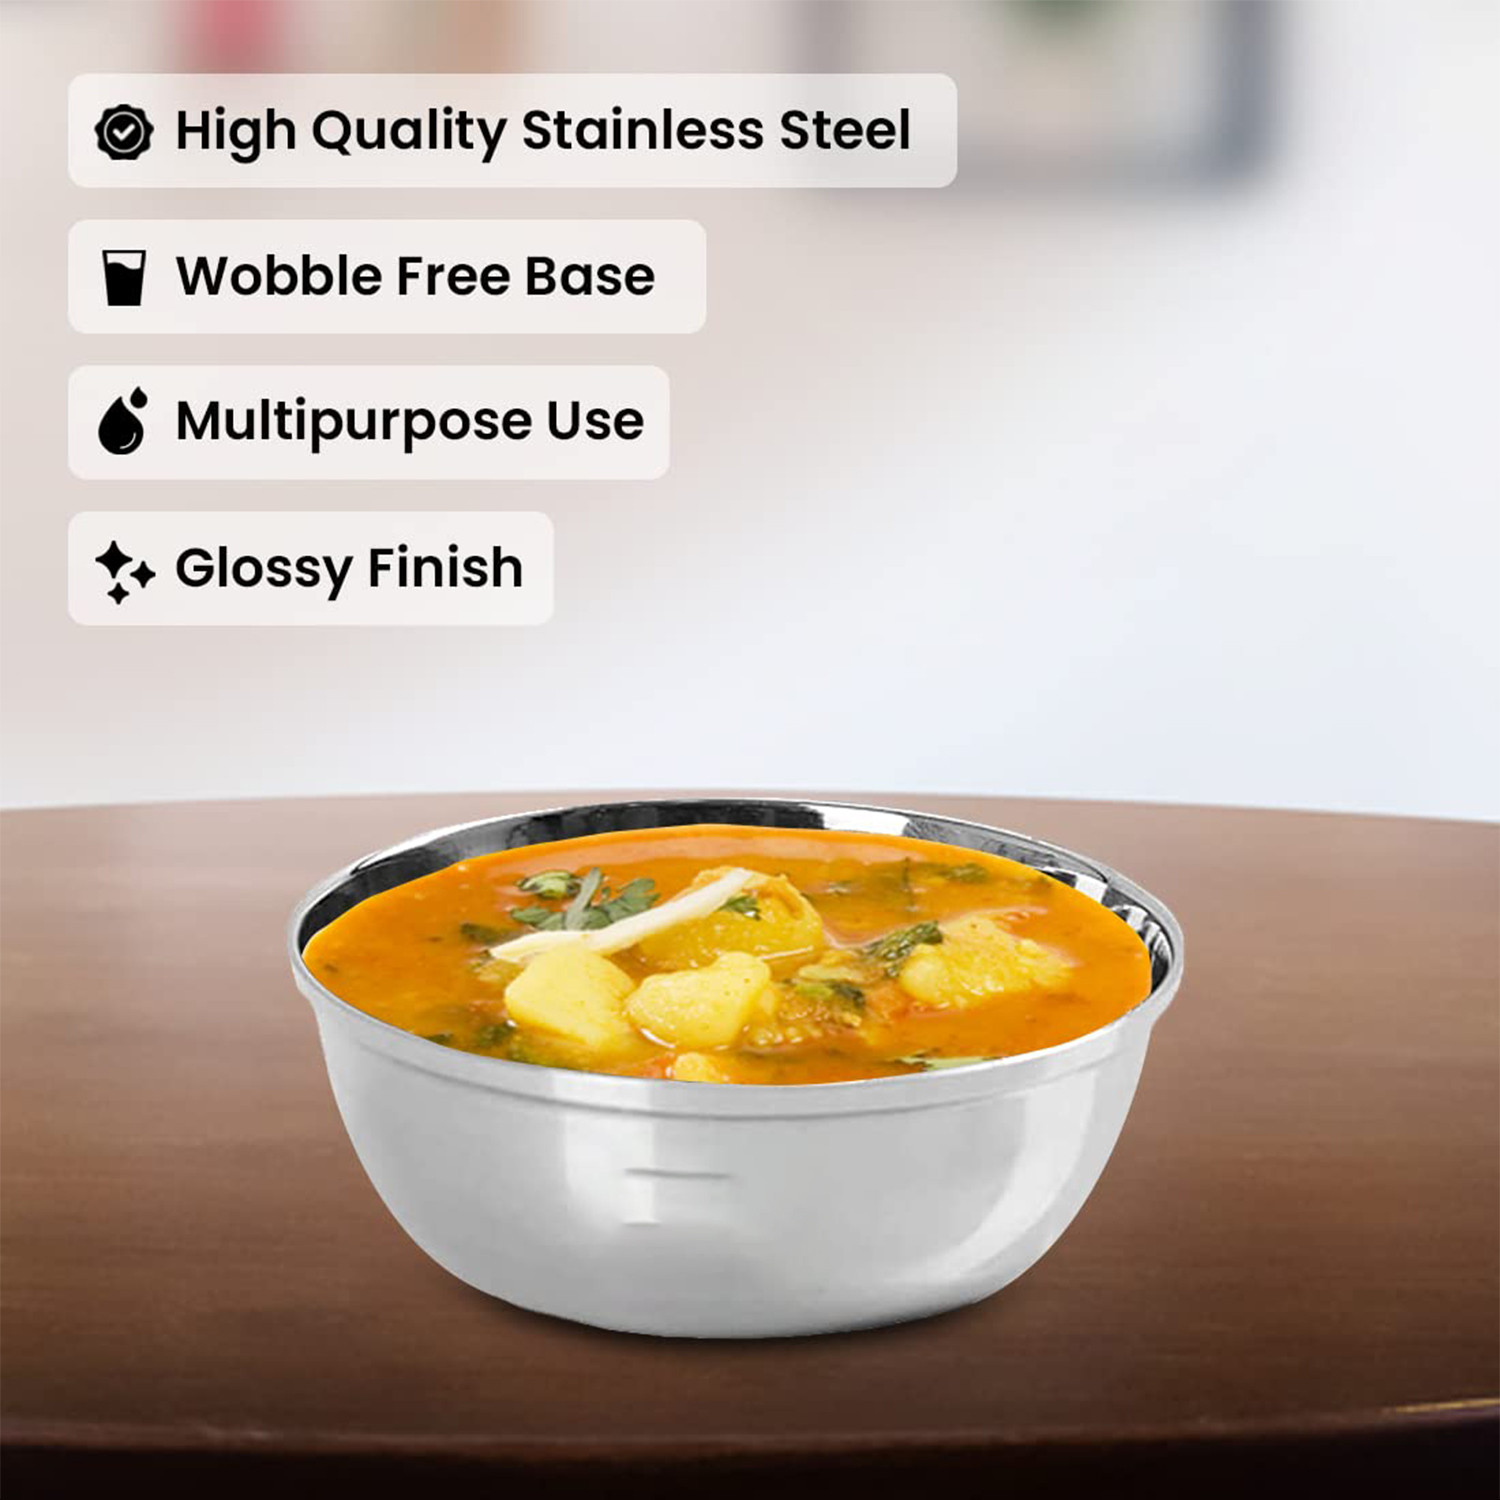 Kuber Industries Stainless Steel Bowl Kitchen Set | Durable & Wobble Free Base | Rust Proof, Easy to Clean & Store | Essential Indian Dinnerware & Crockery | Steel Bowl Set of 6